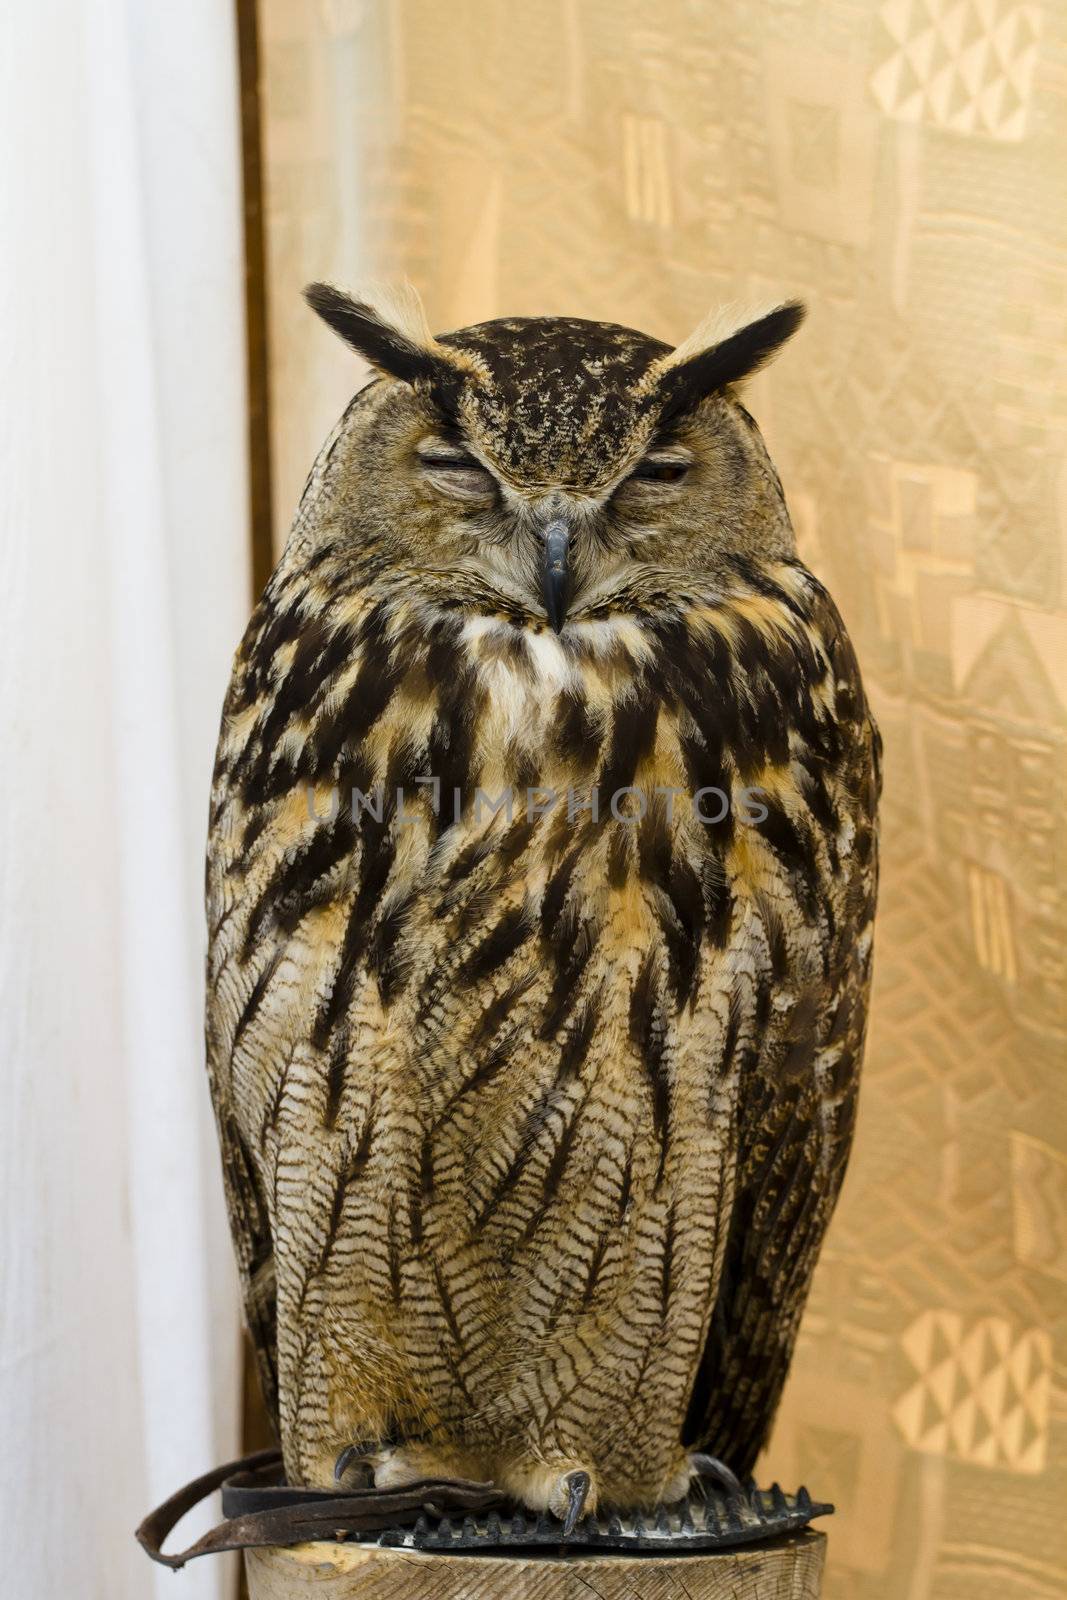 Owl portrait, golden owl